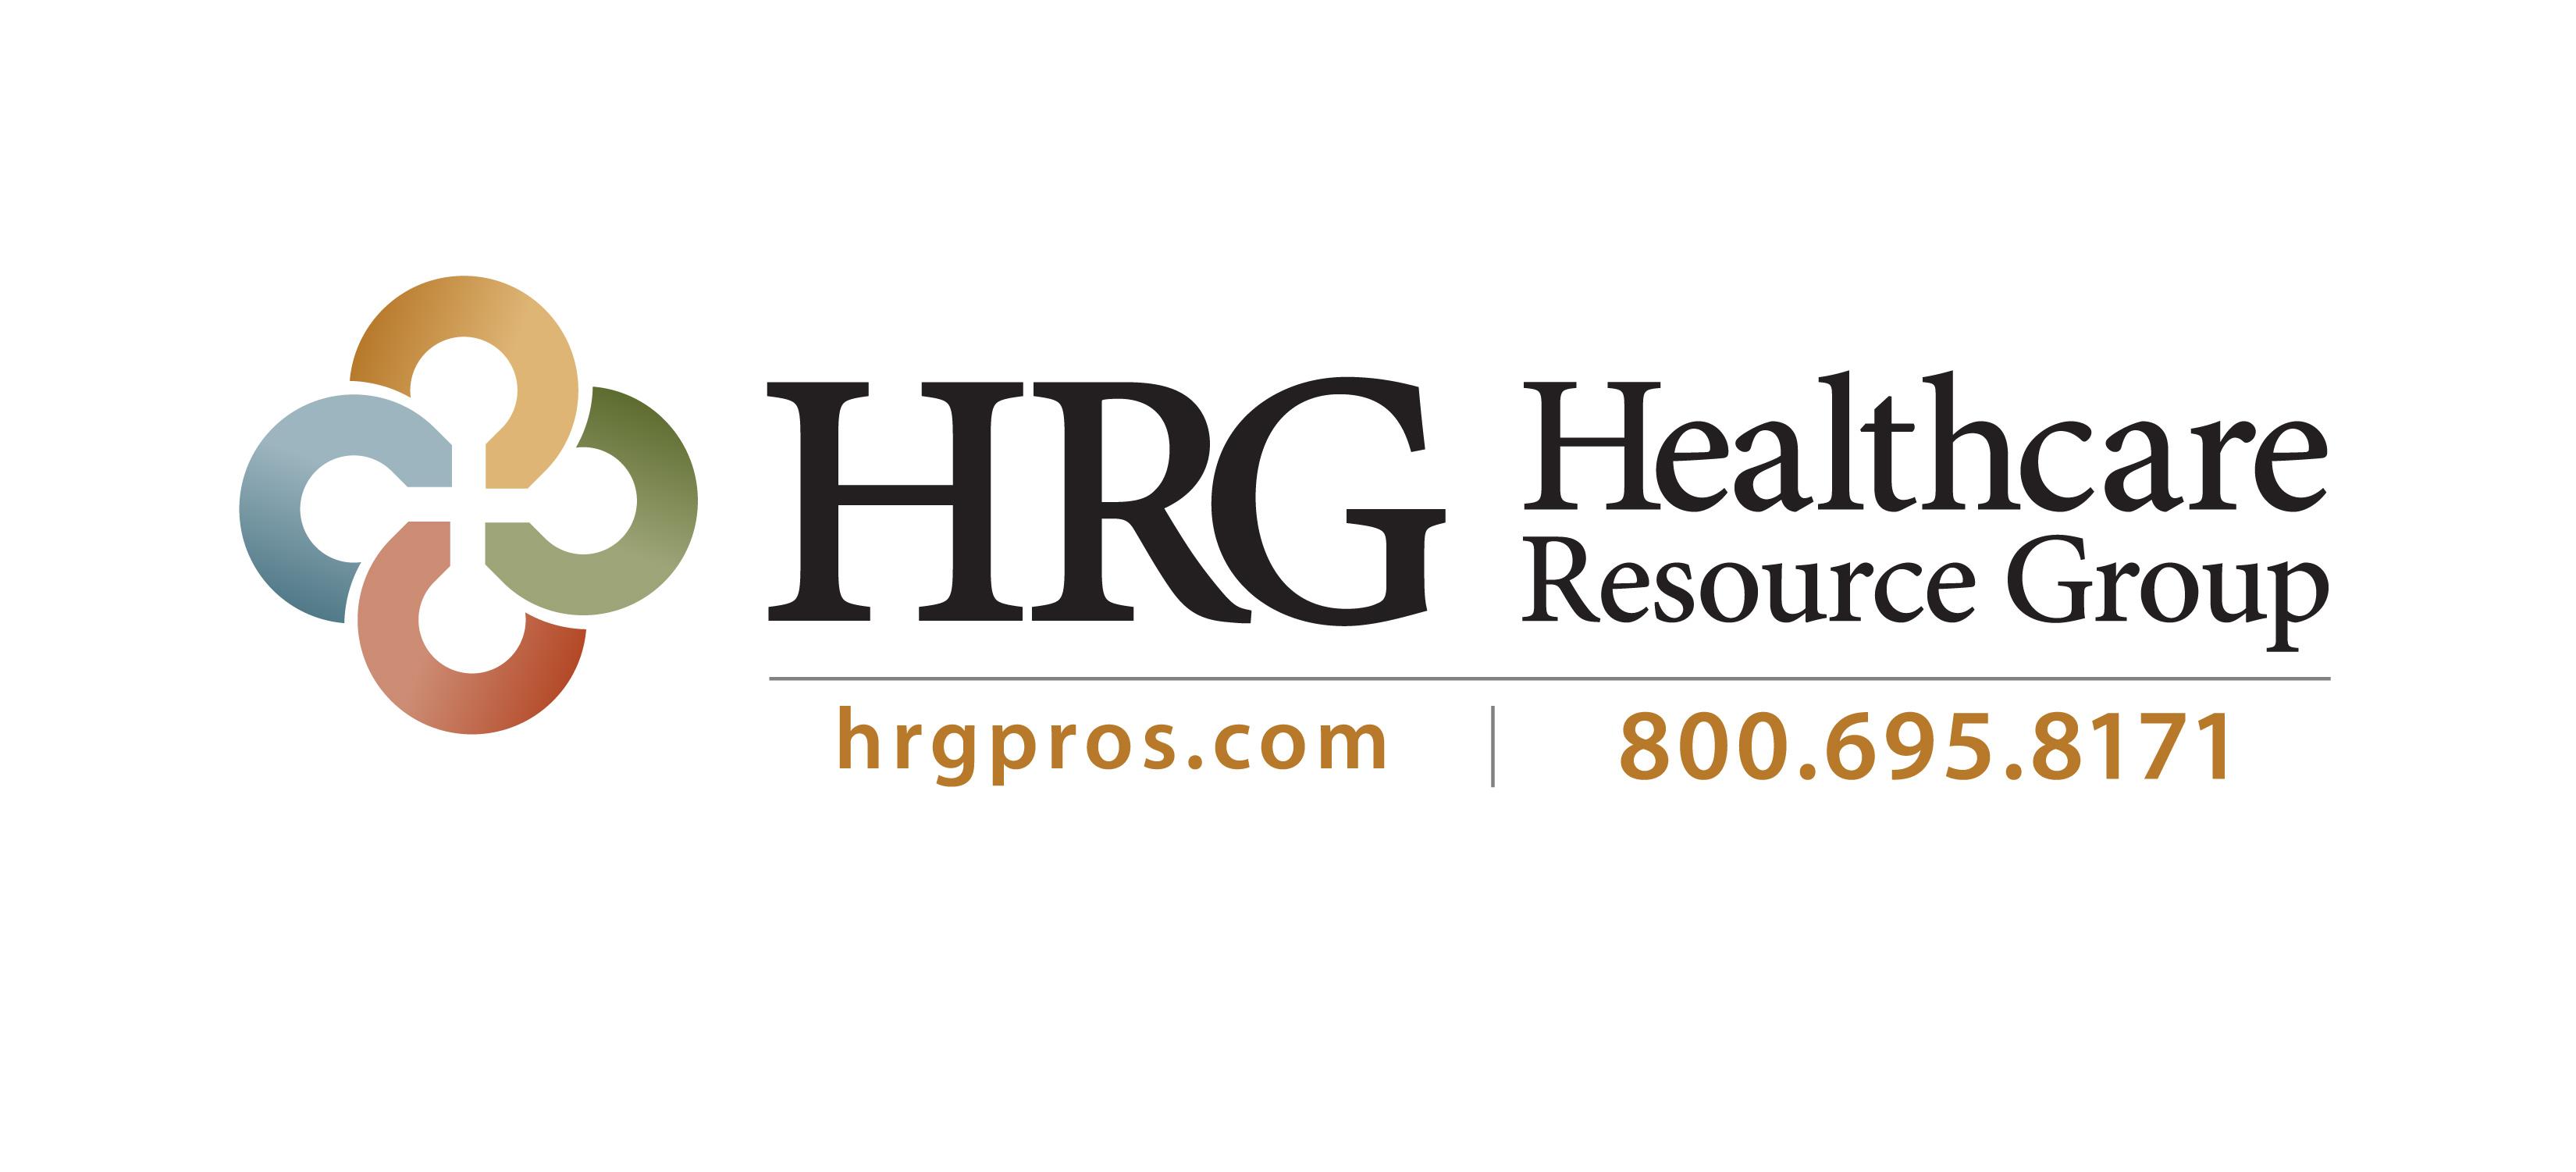 HRG Logo - hrg-white-logo-2017-01 (002) | Washington-Alaska HFMA